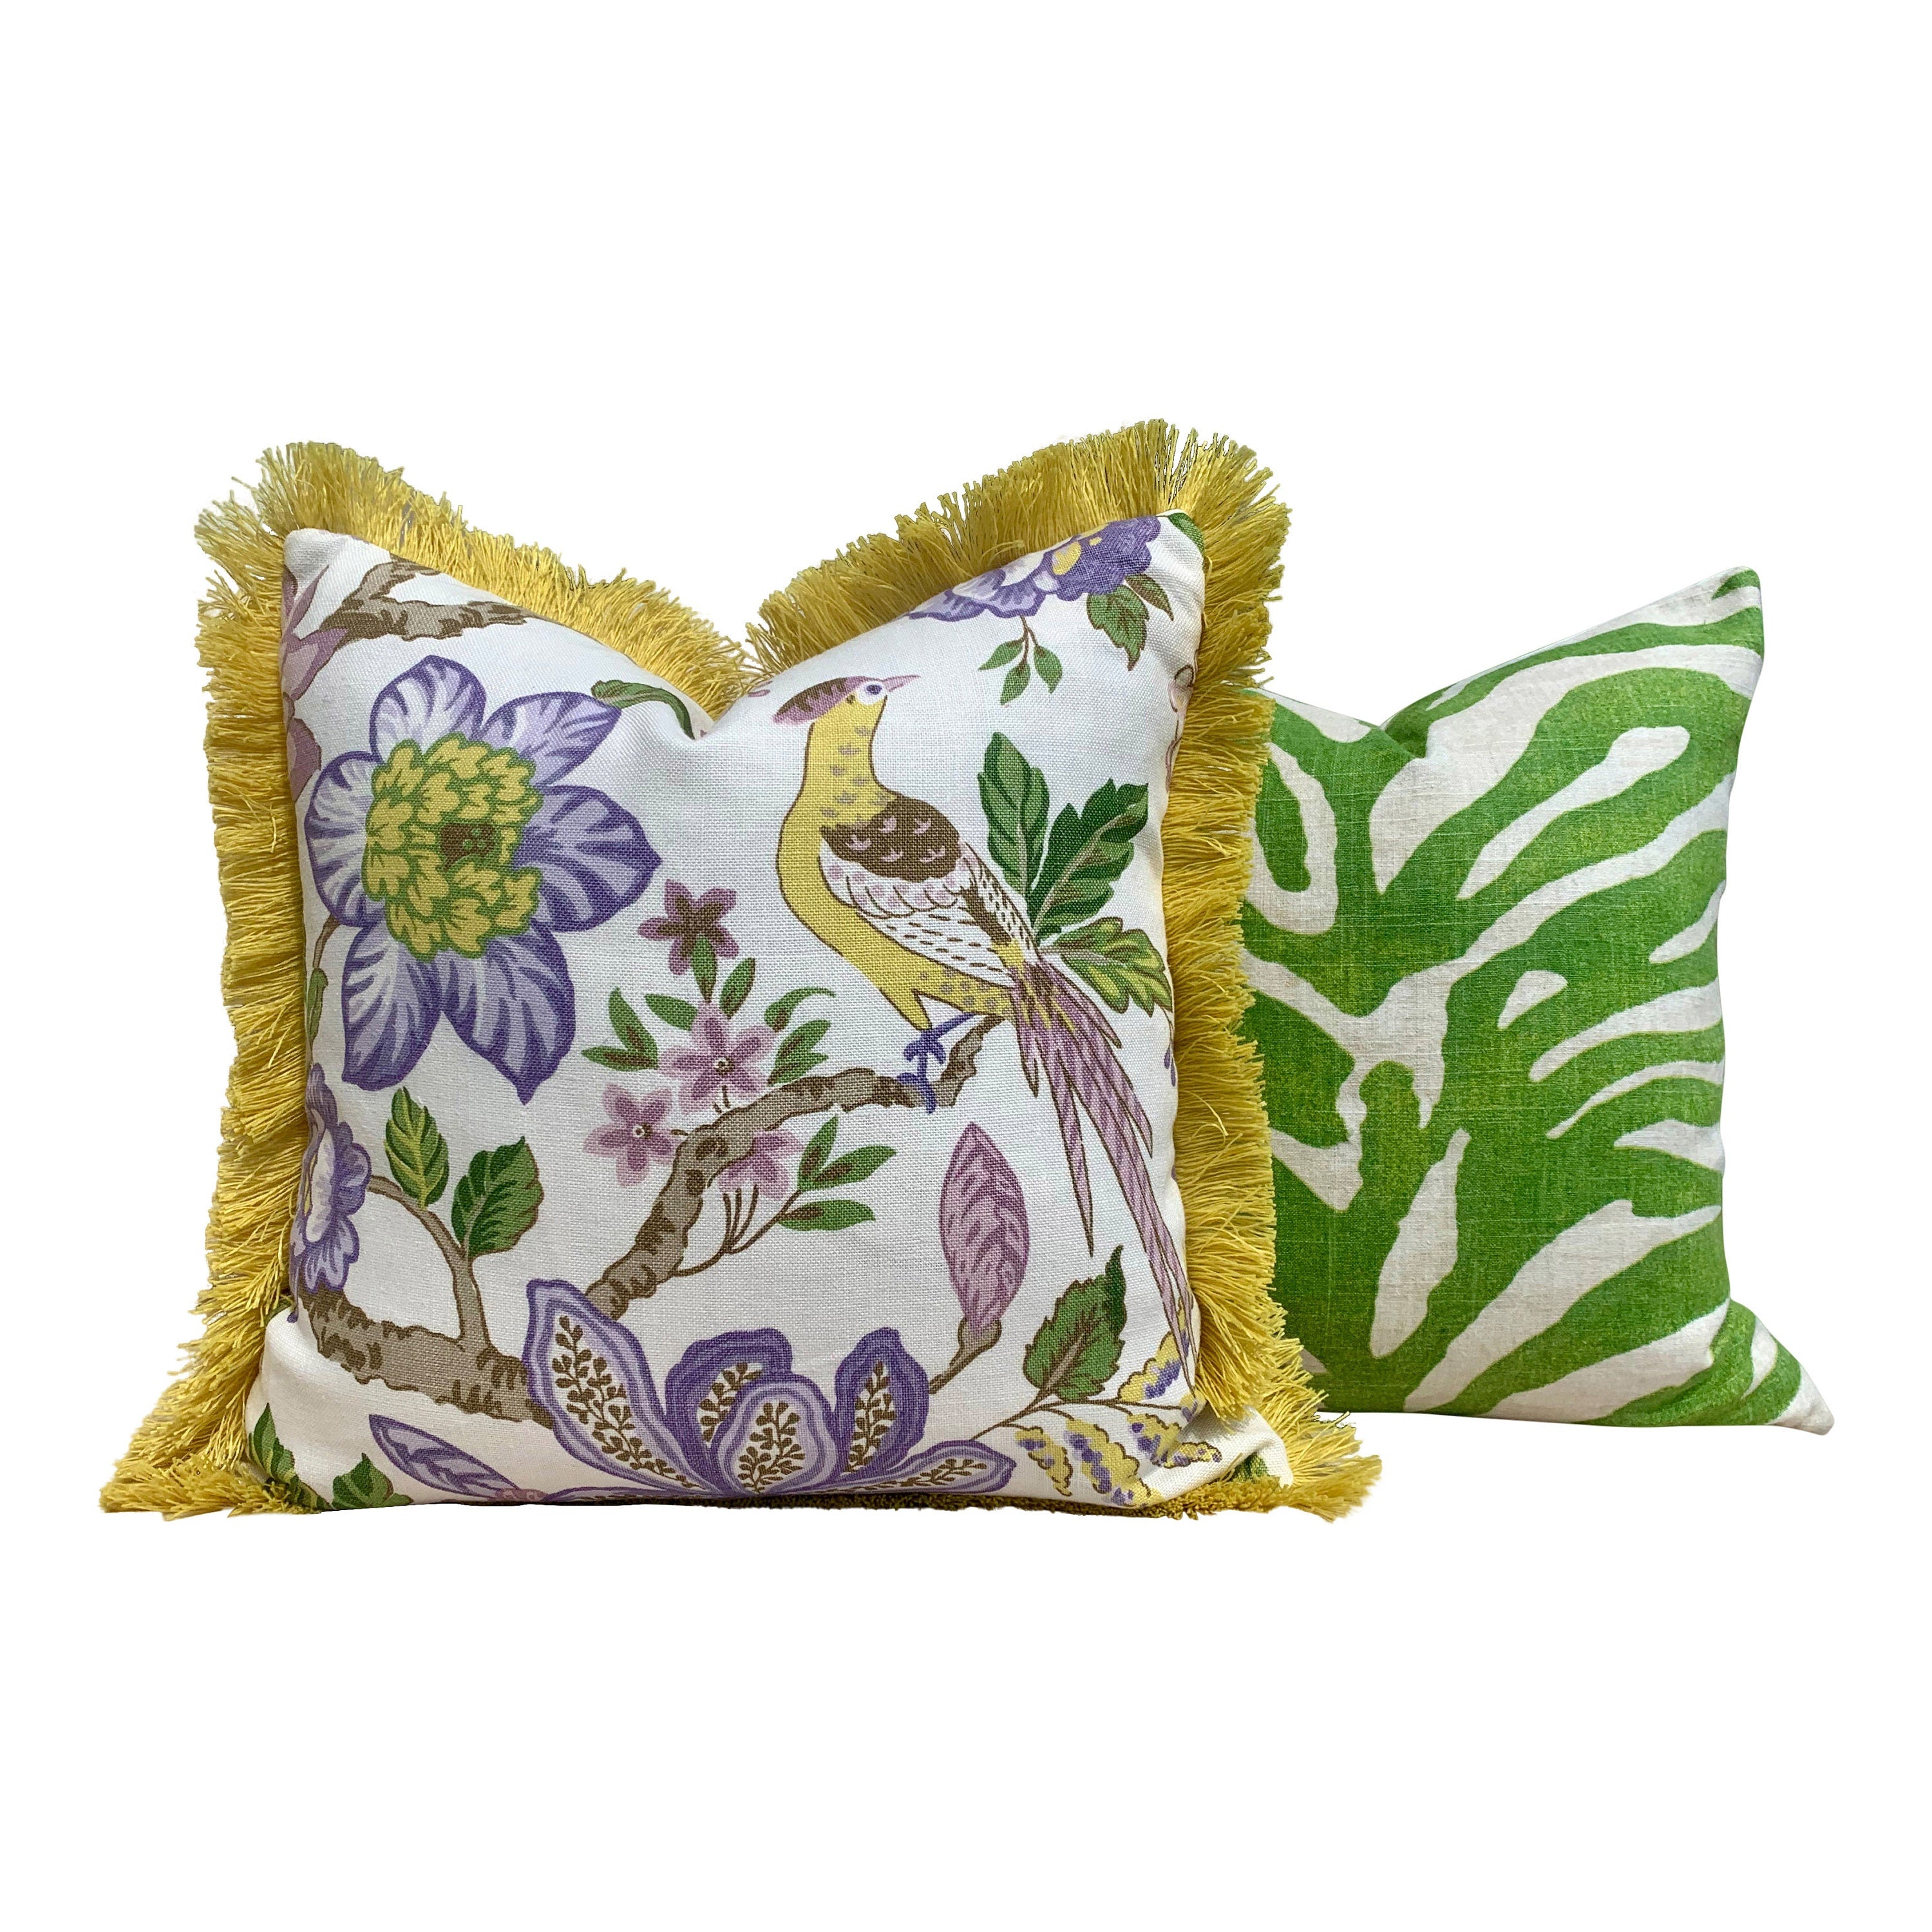 Schumacher Huntington Garden Pillow in Lilac. Decorative lumbar Pillow in Yellow.